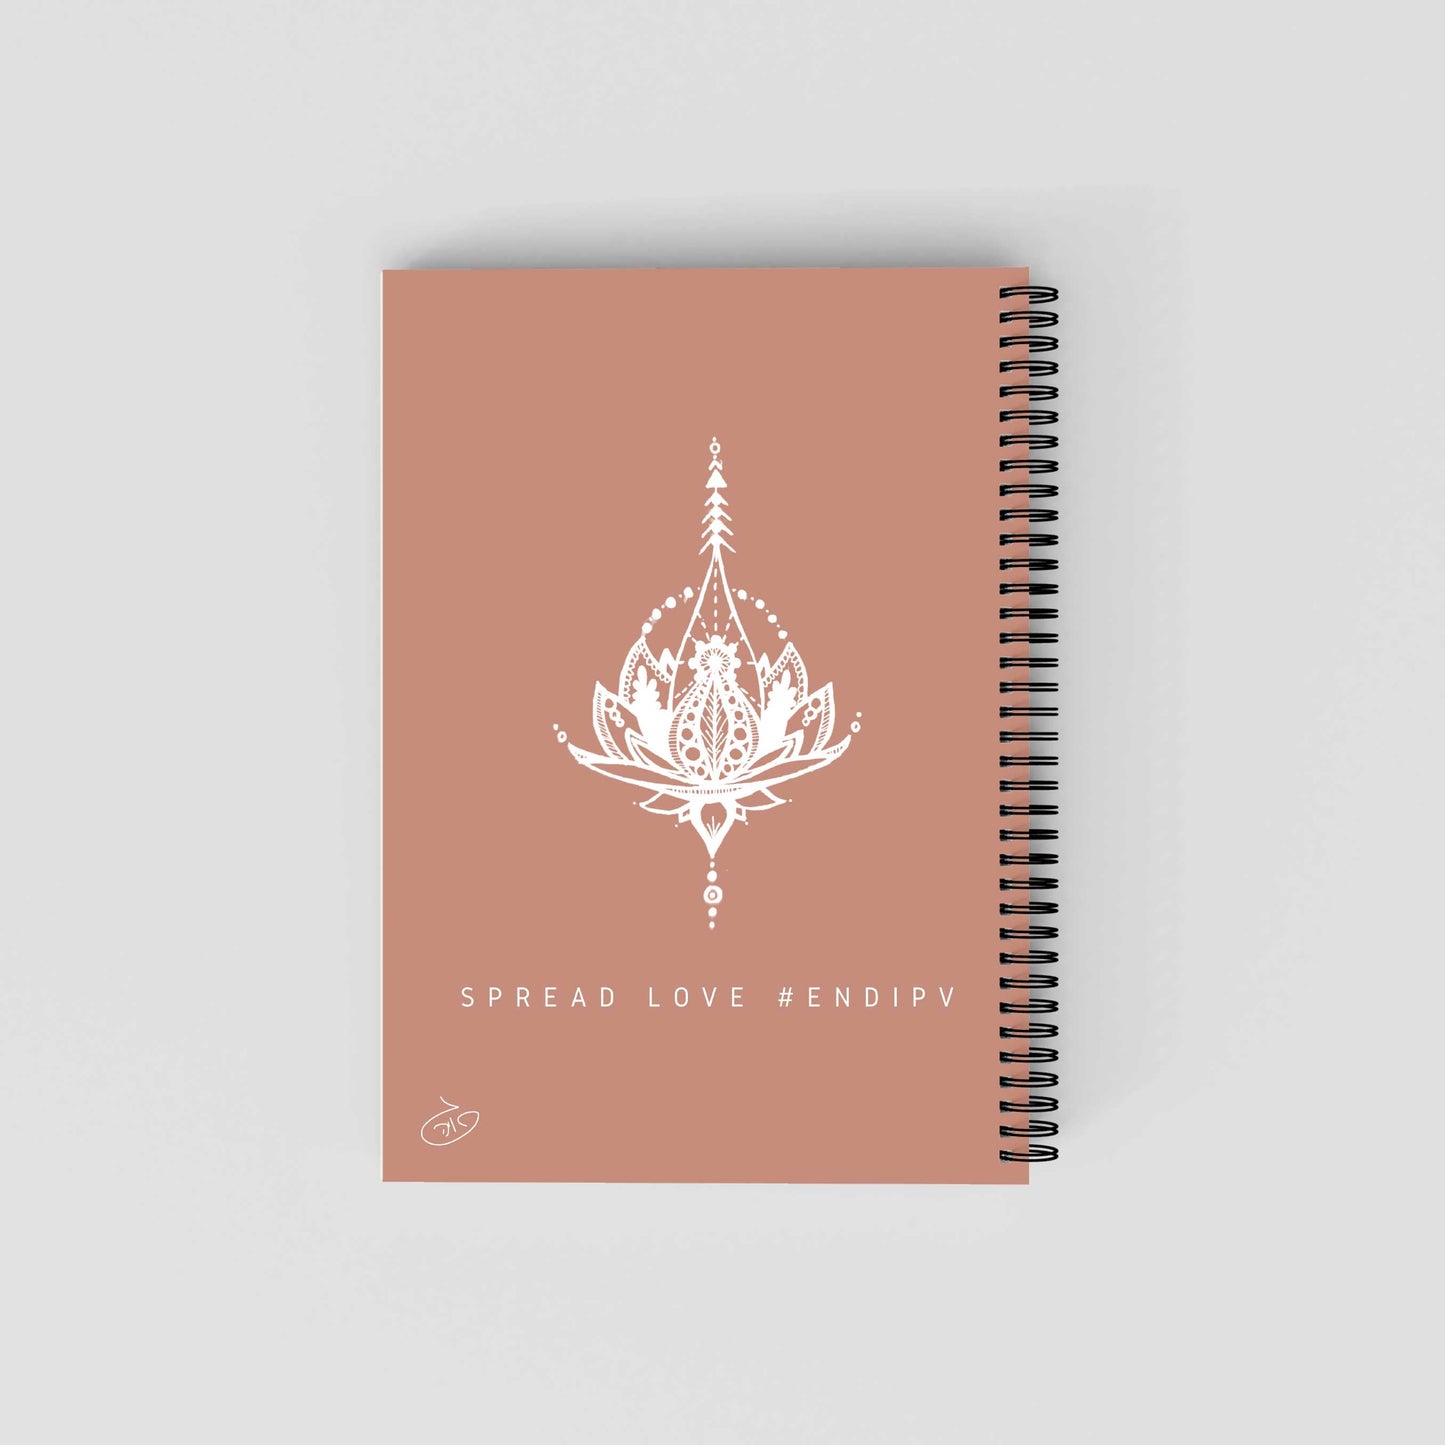 White Lily Lotus Notebook | Gaya's Drawing | מחברת ספירלה עם הציורים של גאיה